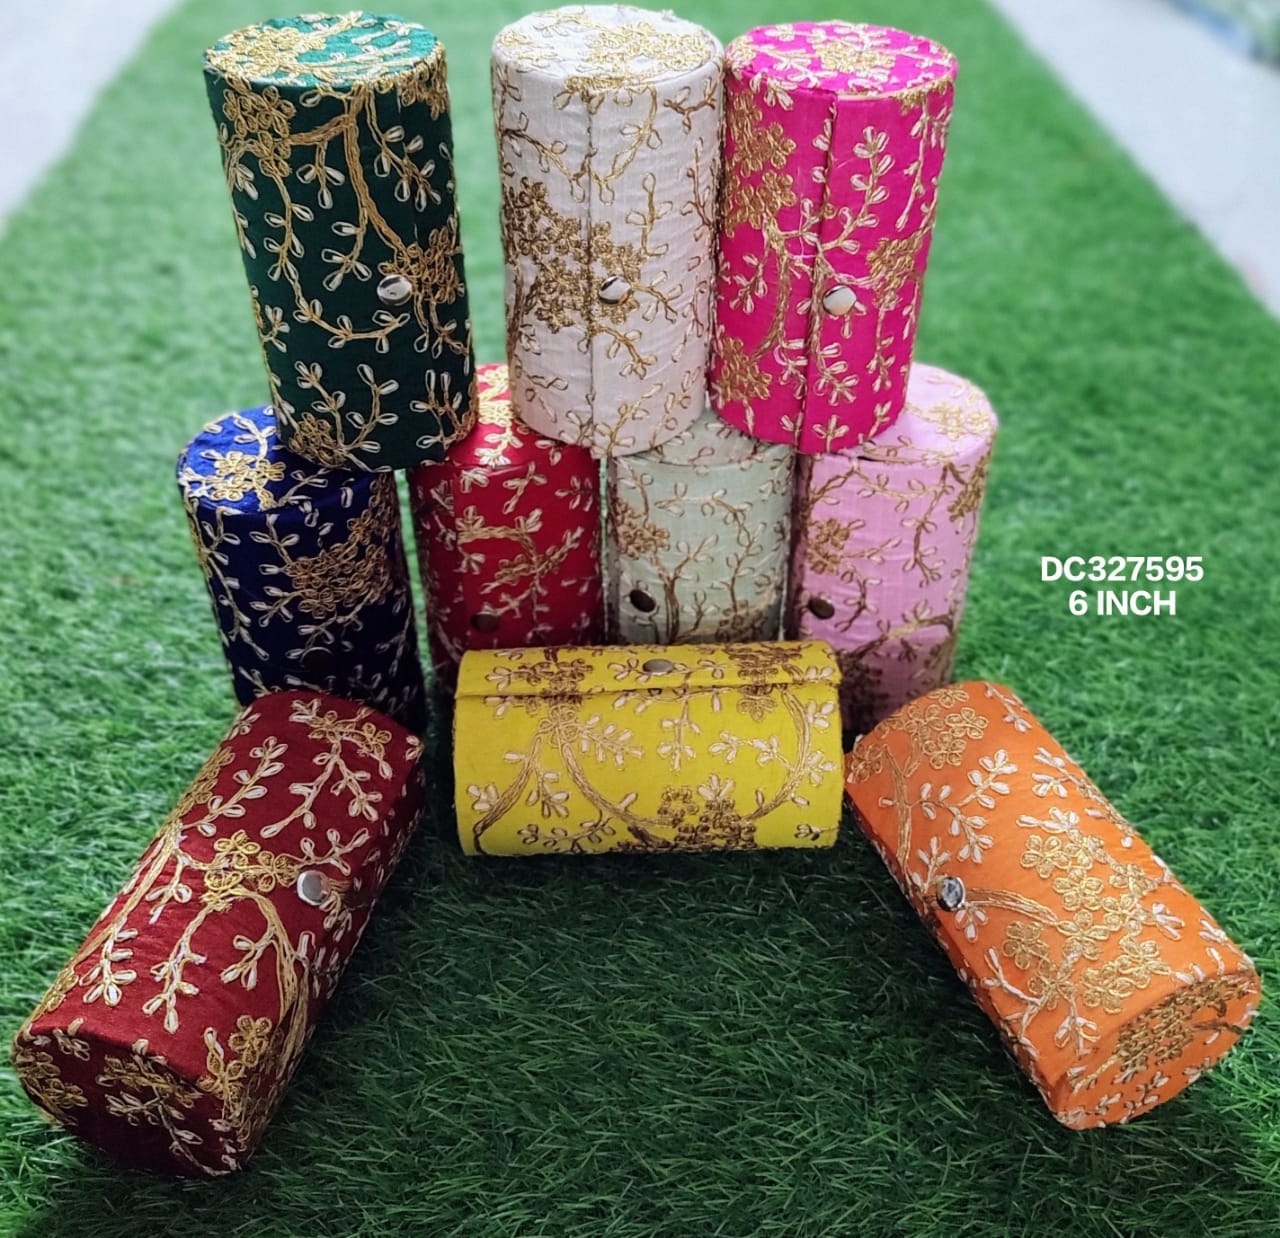 100 Rs each on buying 🏷in bulk | Call 📞 at 8619550223 bangle gift box Assorted colors LAMANSH (Size - 6*6 inch)Bangle box Lot Of 100 Jewelry box, Wedding Favor, Bangle Box,Wedding Gift, Birthday Gift, Gift Box, Indian Bridesmaid box, Return Gift New